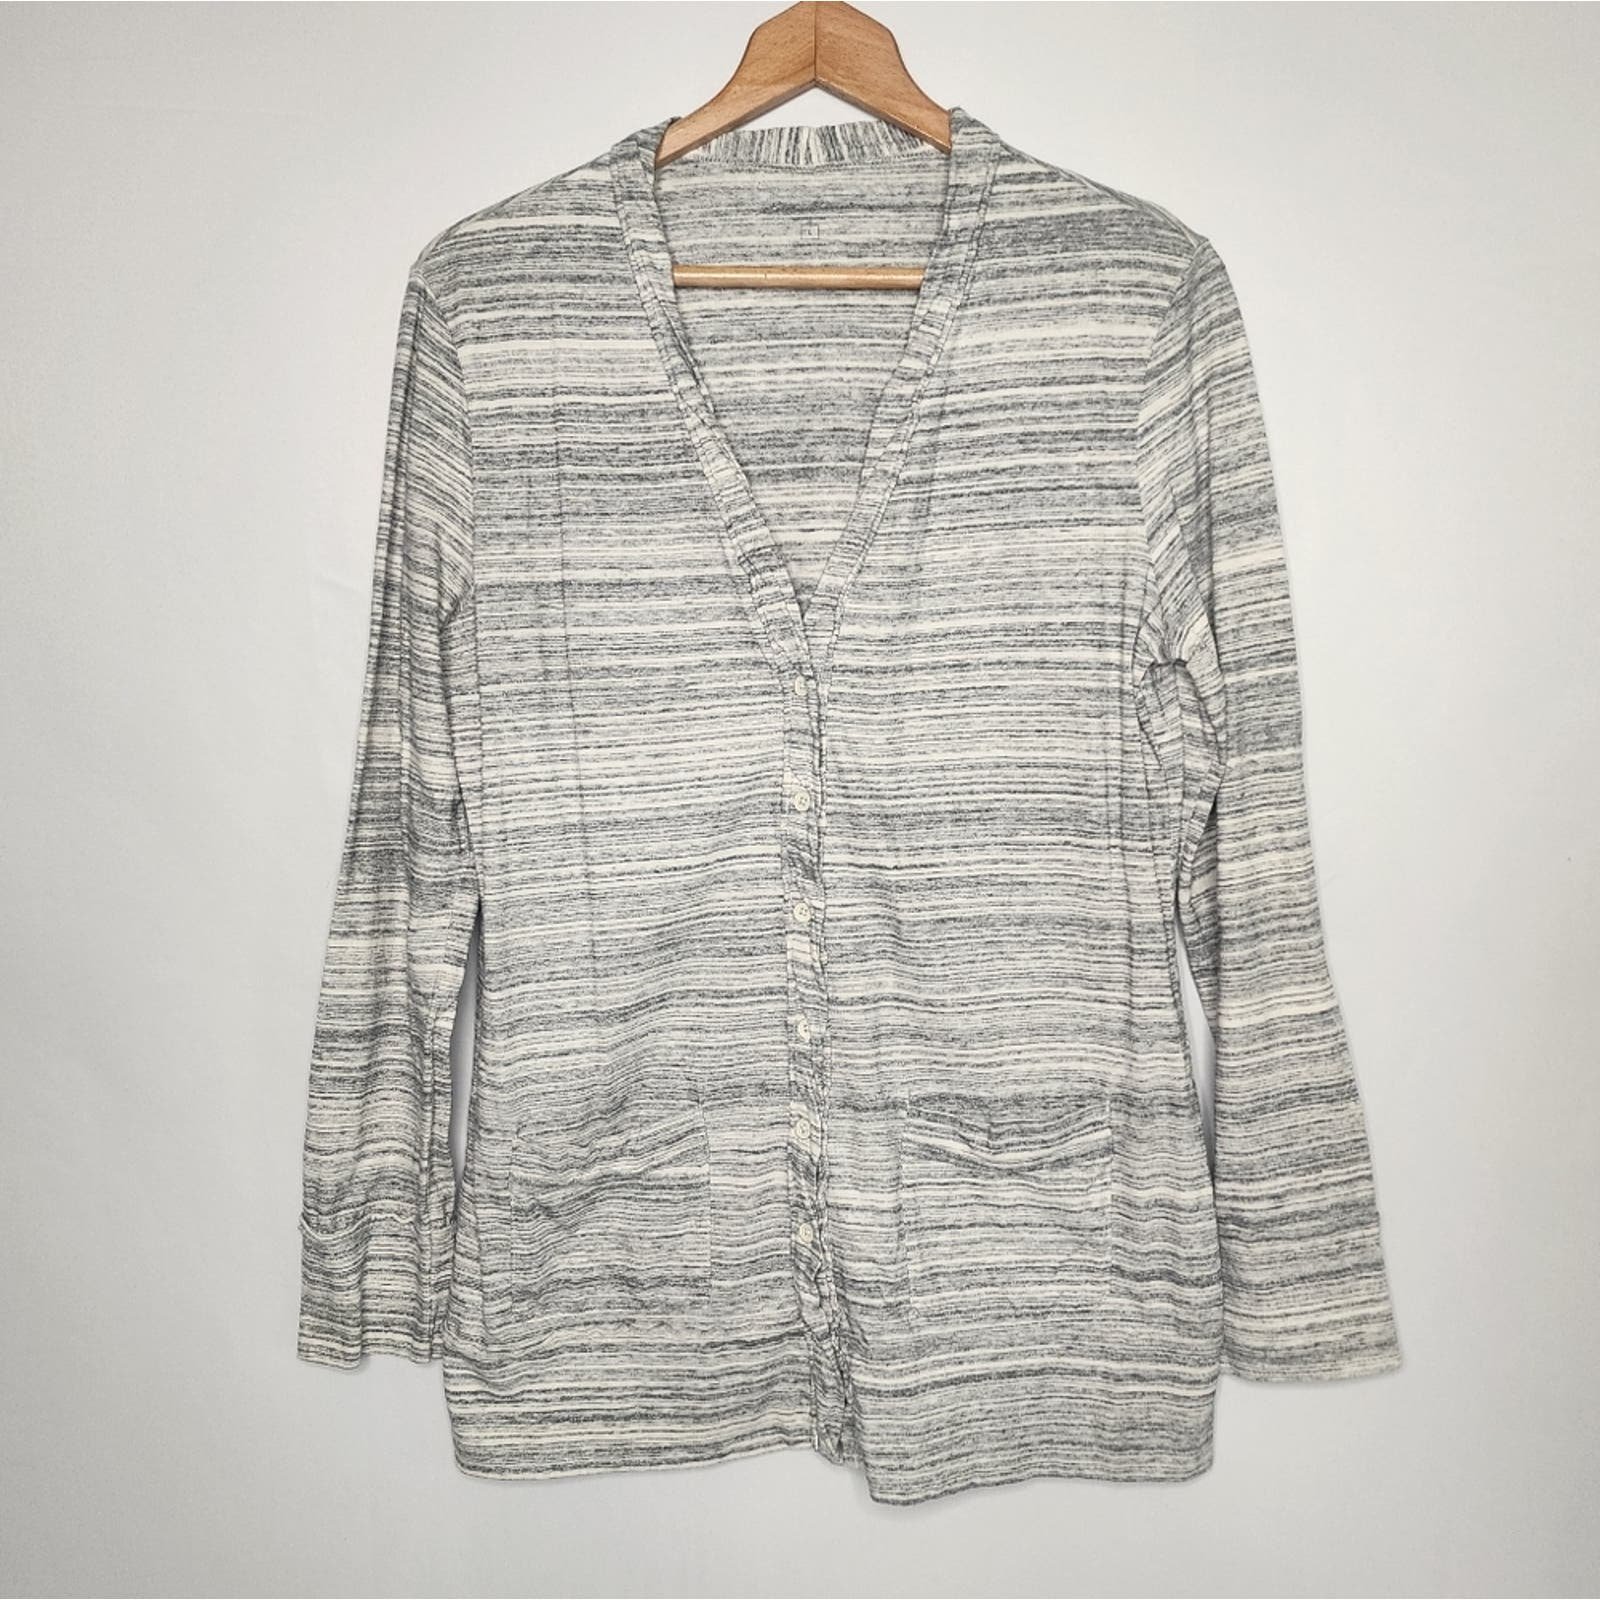 good price Eddie Bauer Gray Striped Cotton Cardigan Women´s Size Large m9jBSOho7 Outlet Store